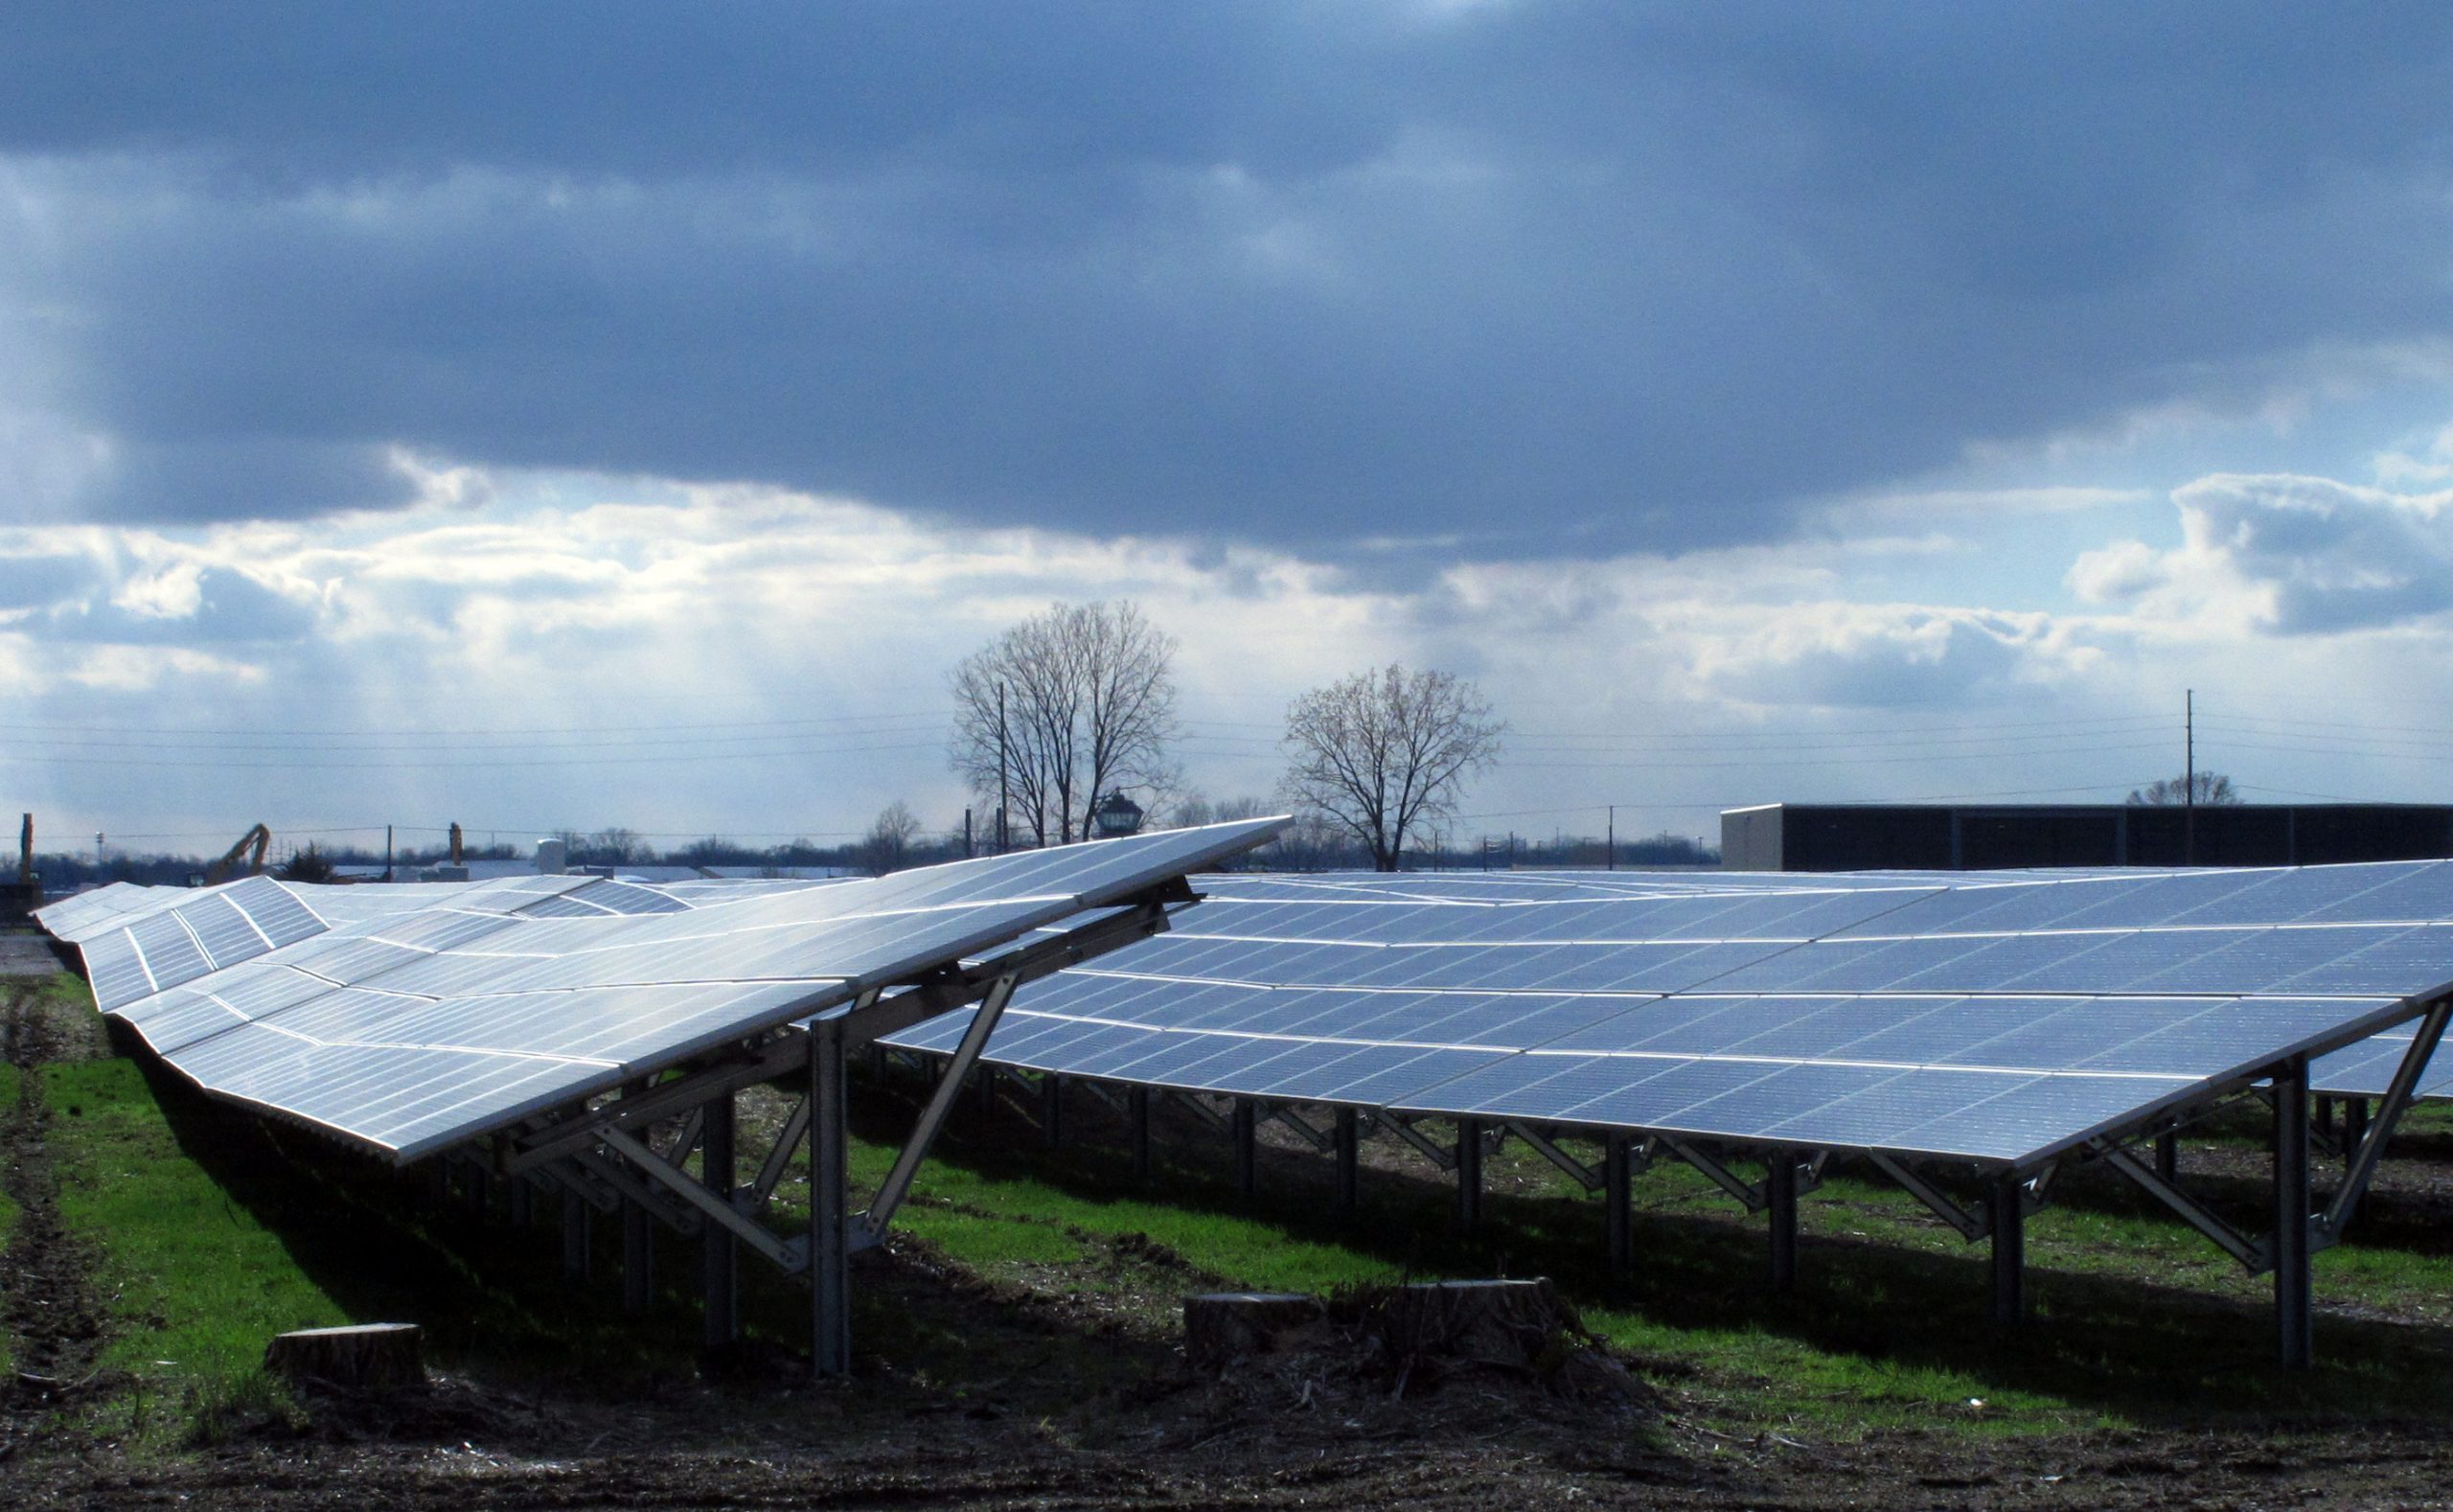 Largest US solar farm on Superfund site now online - Washington Examiner